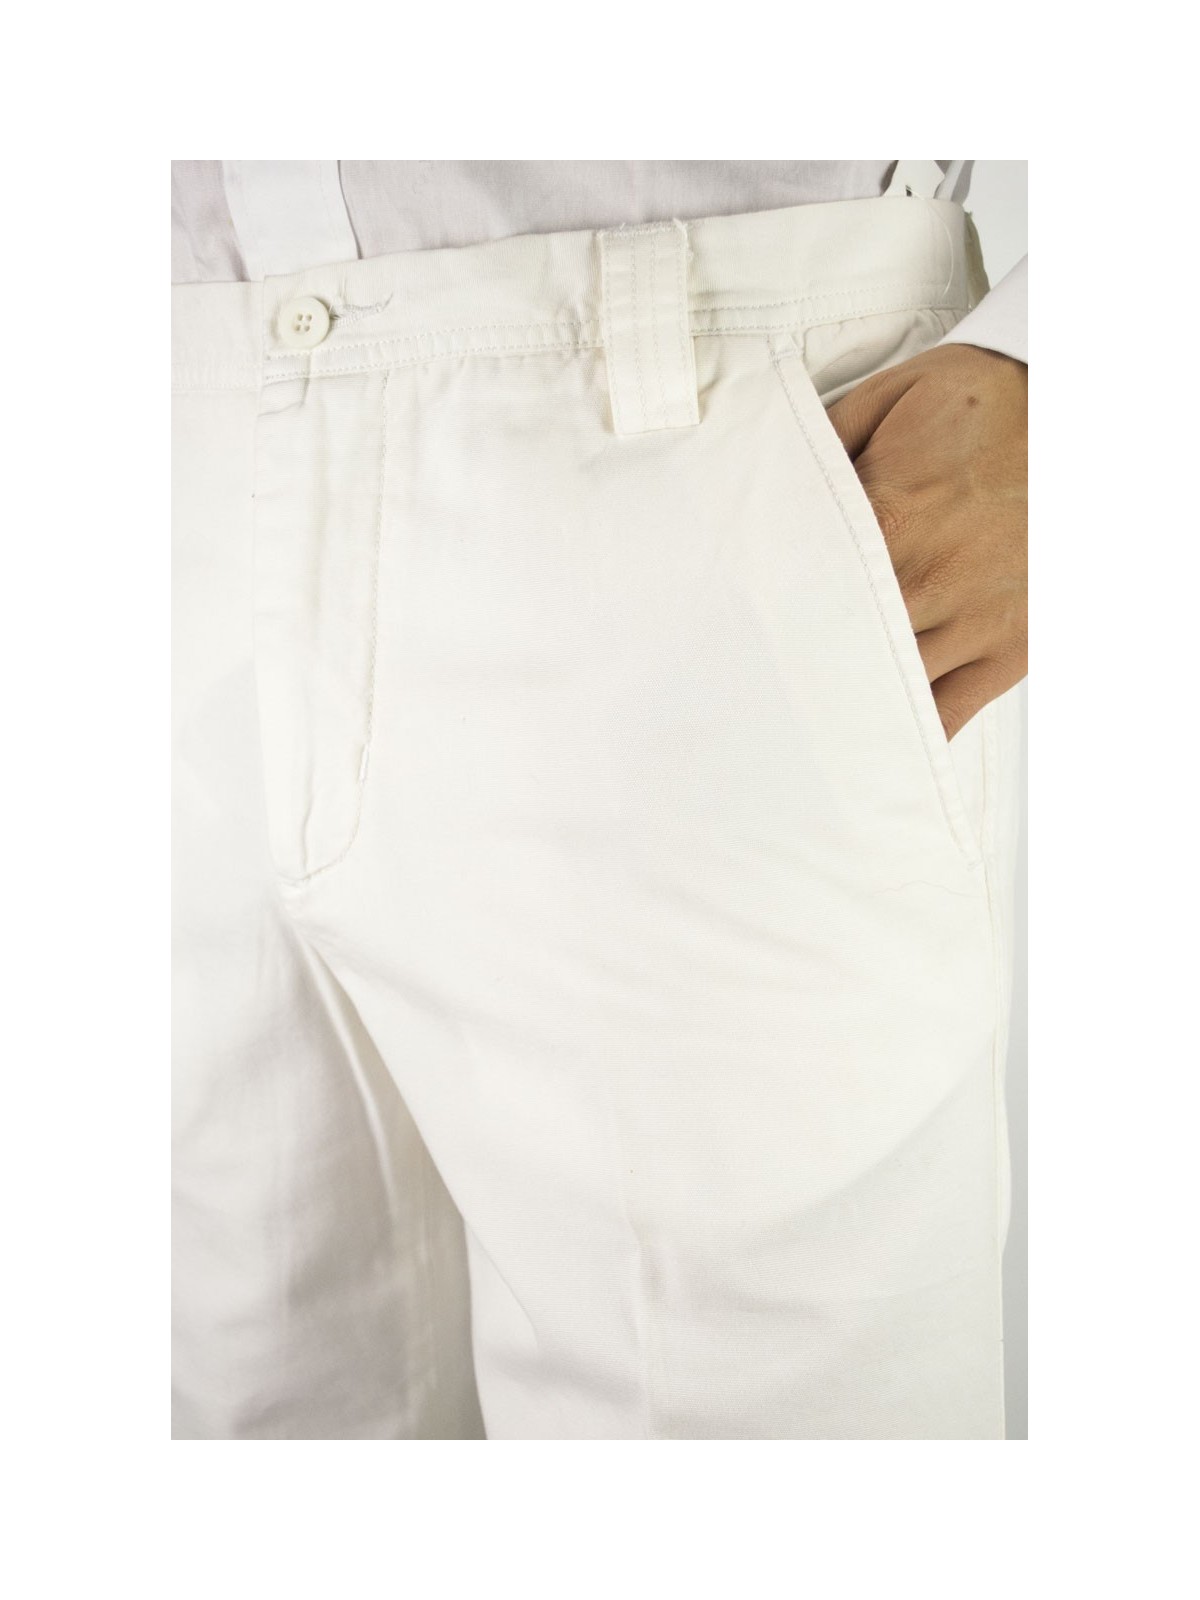 Pantaloni Uomo Casual taglia 48 Avorio Panama Cotone - PE